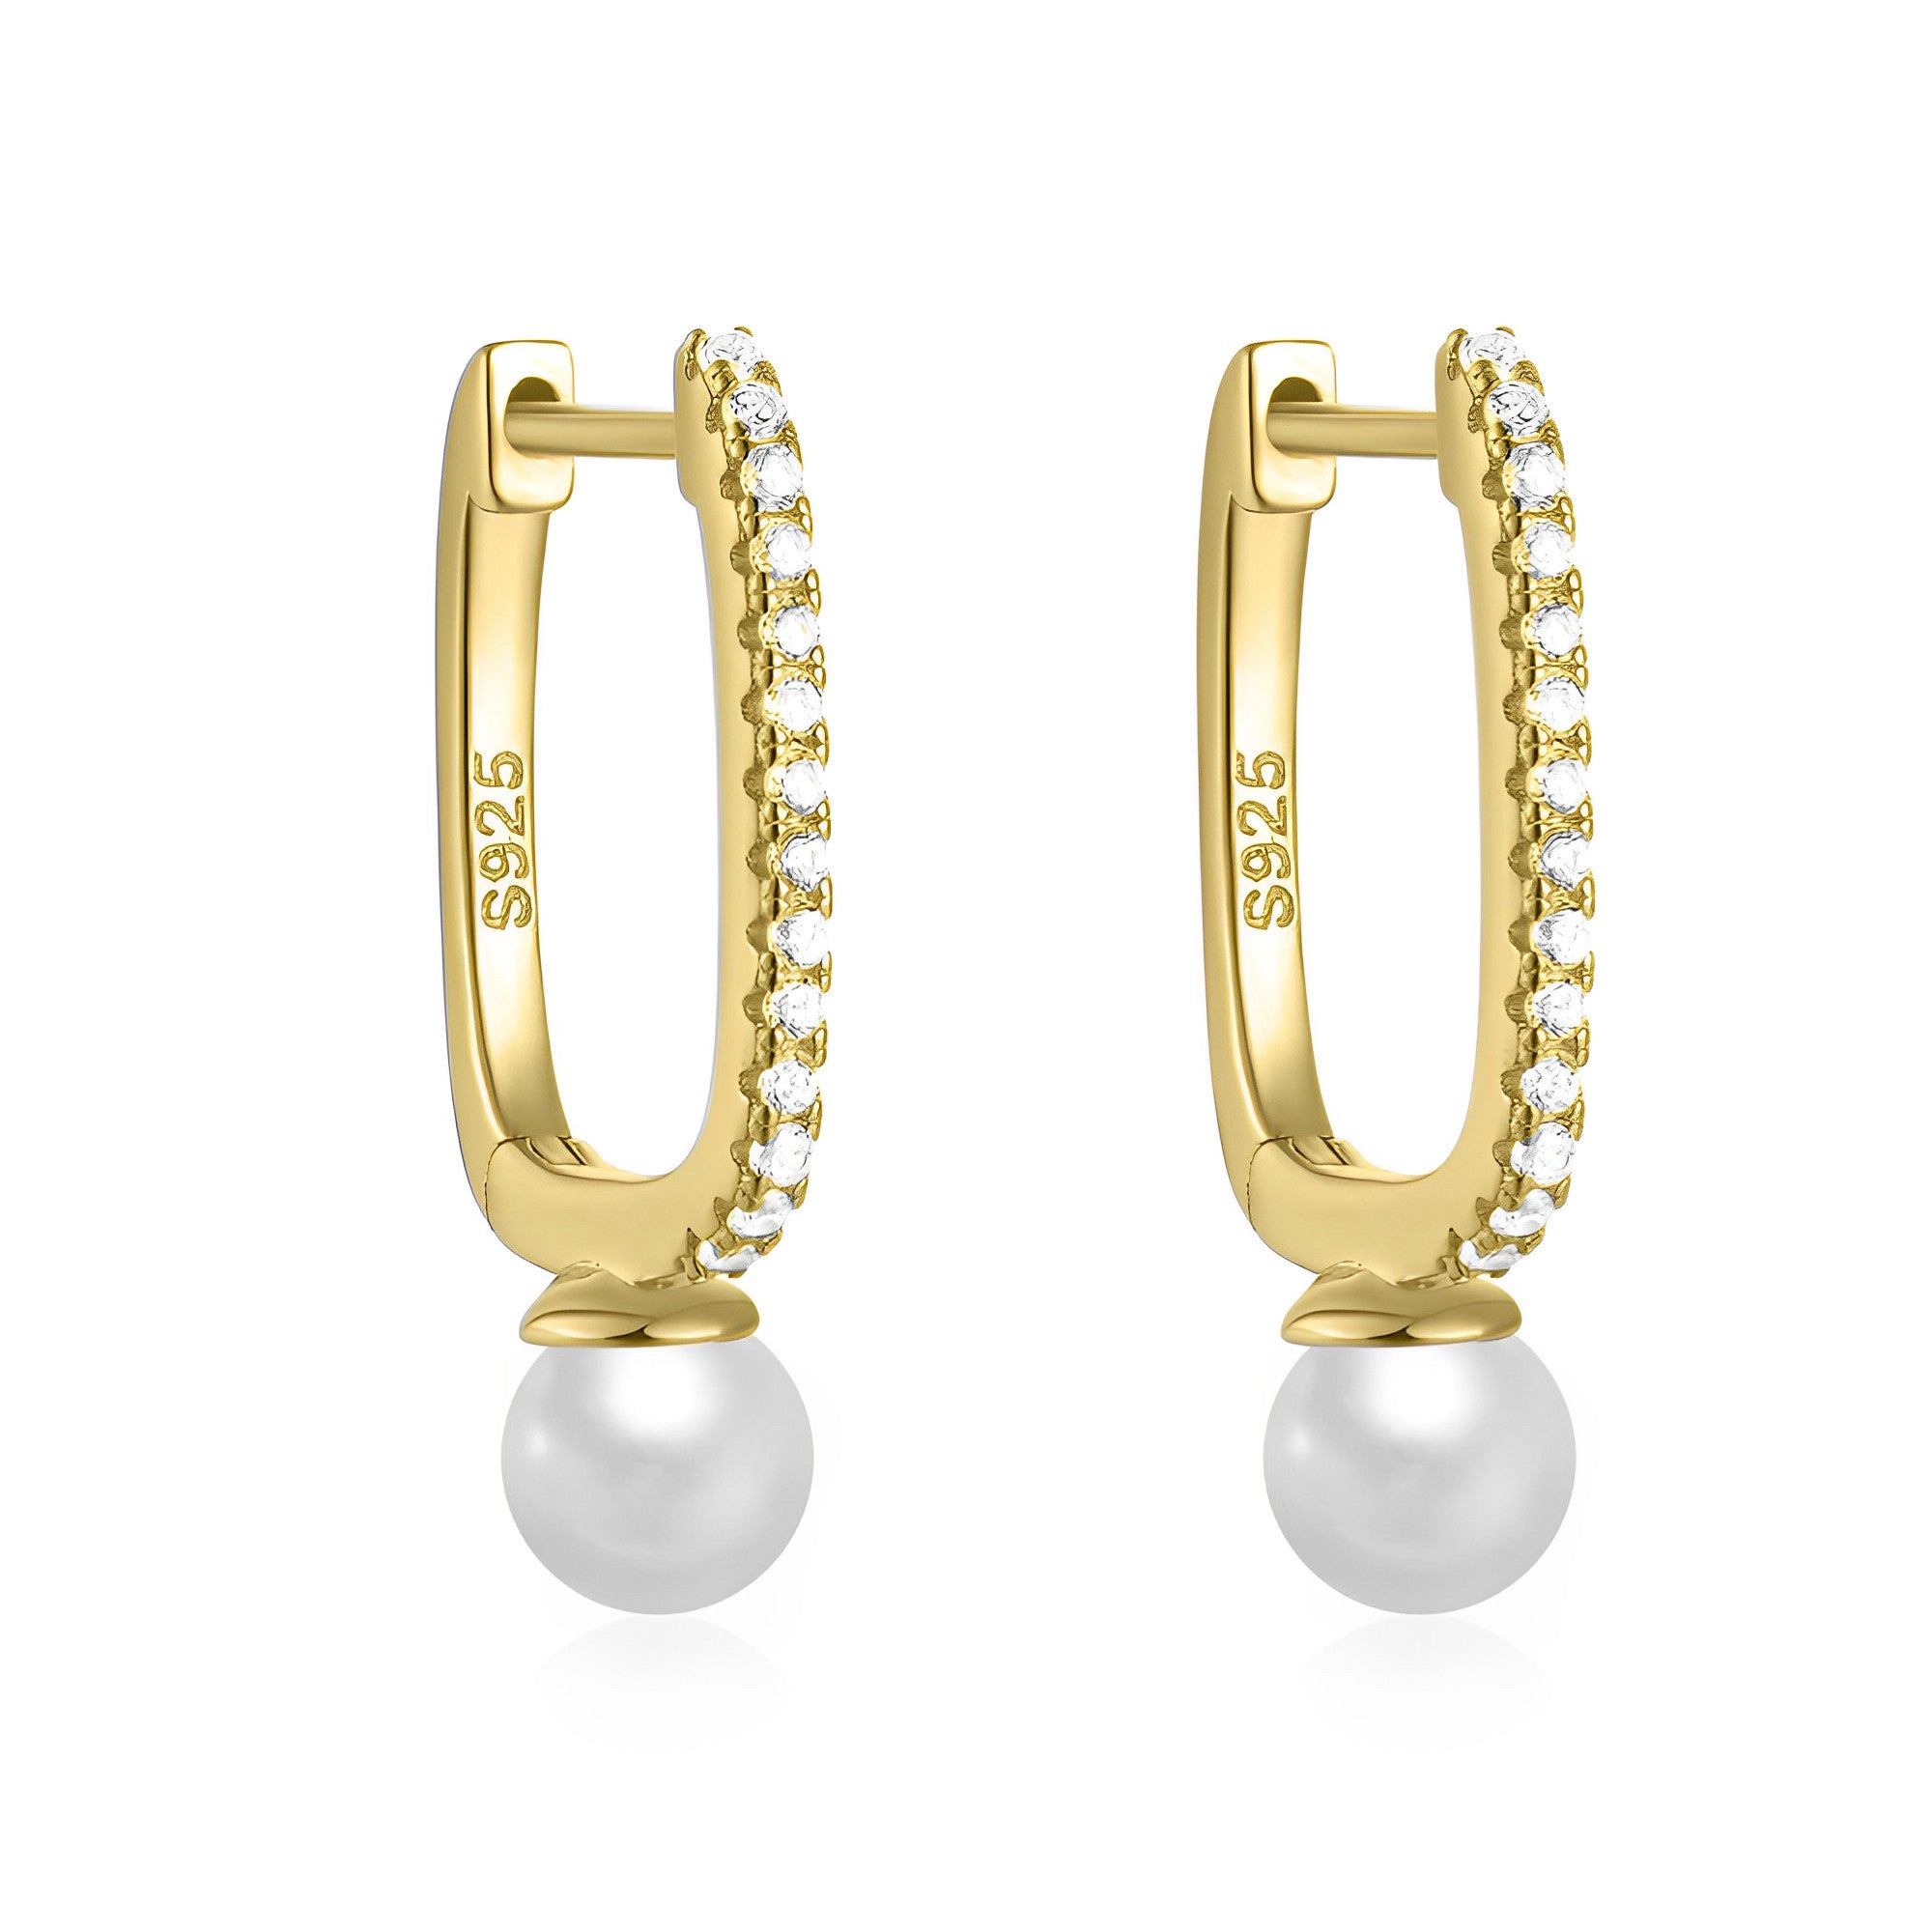 Cercei Pearls&Crystals, argint placat cu aur  Maison la Stephanie   